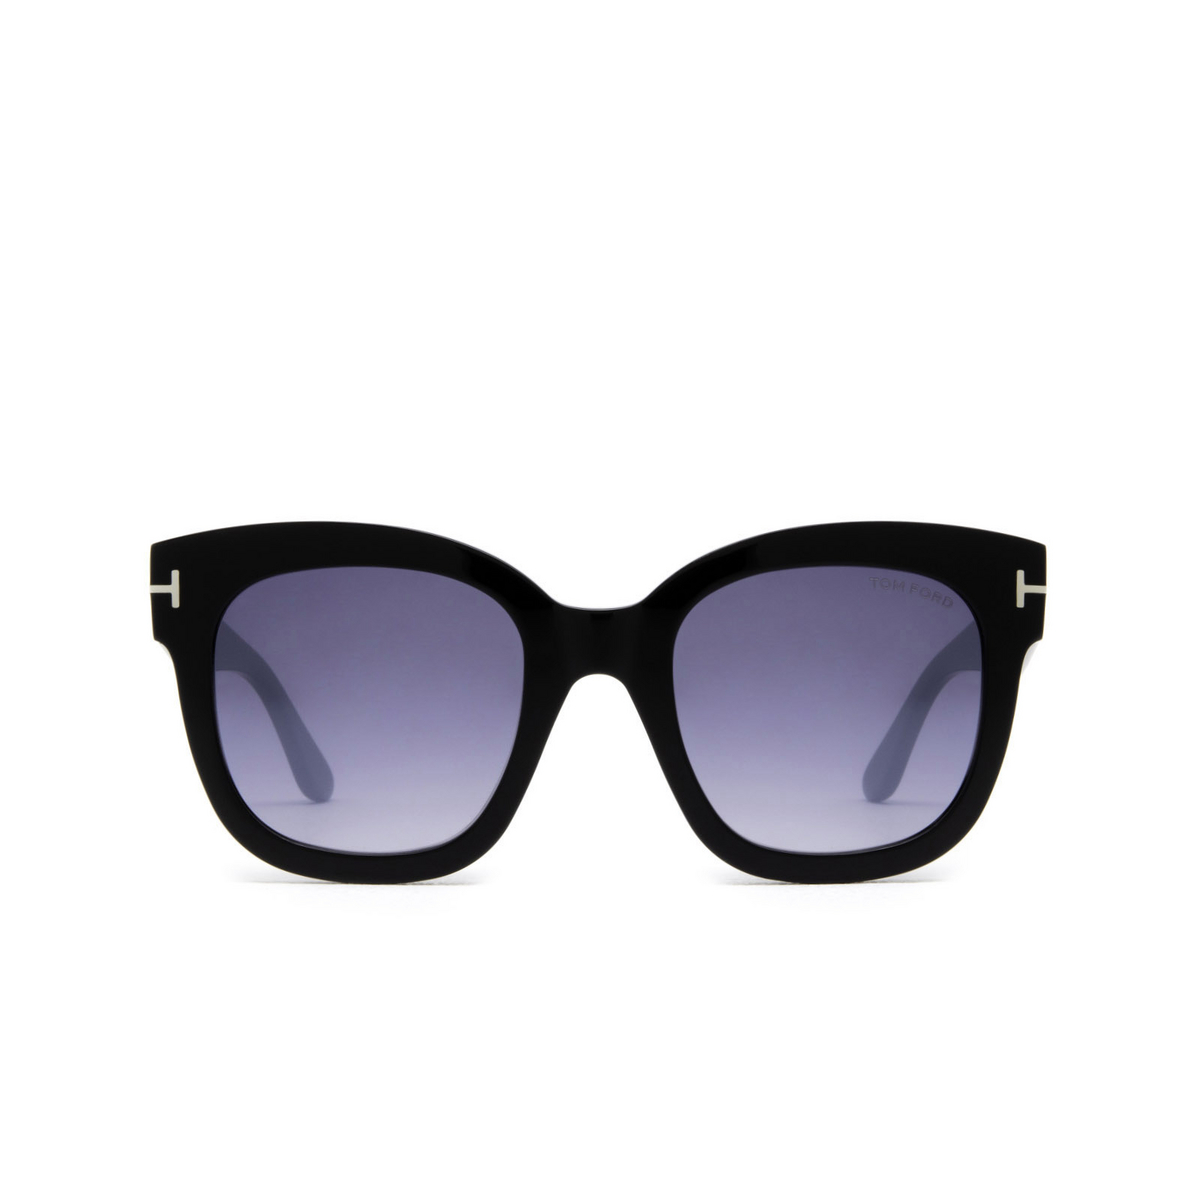 Tom Ford® Square Sunglasses: Beatrix-02 FT0613 color Black 01C - front view.